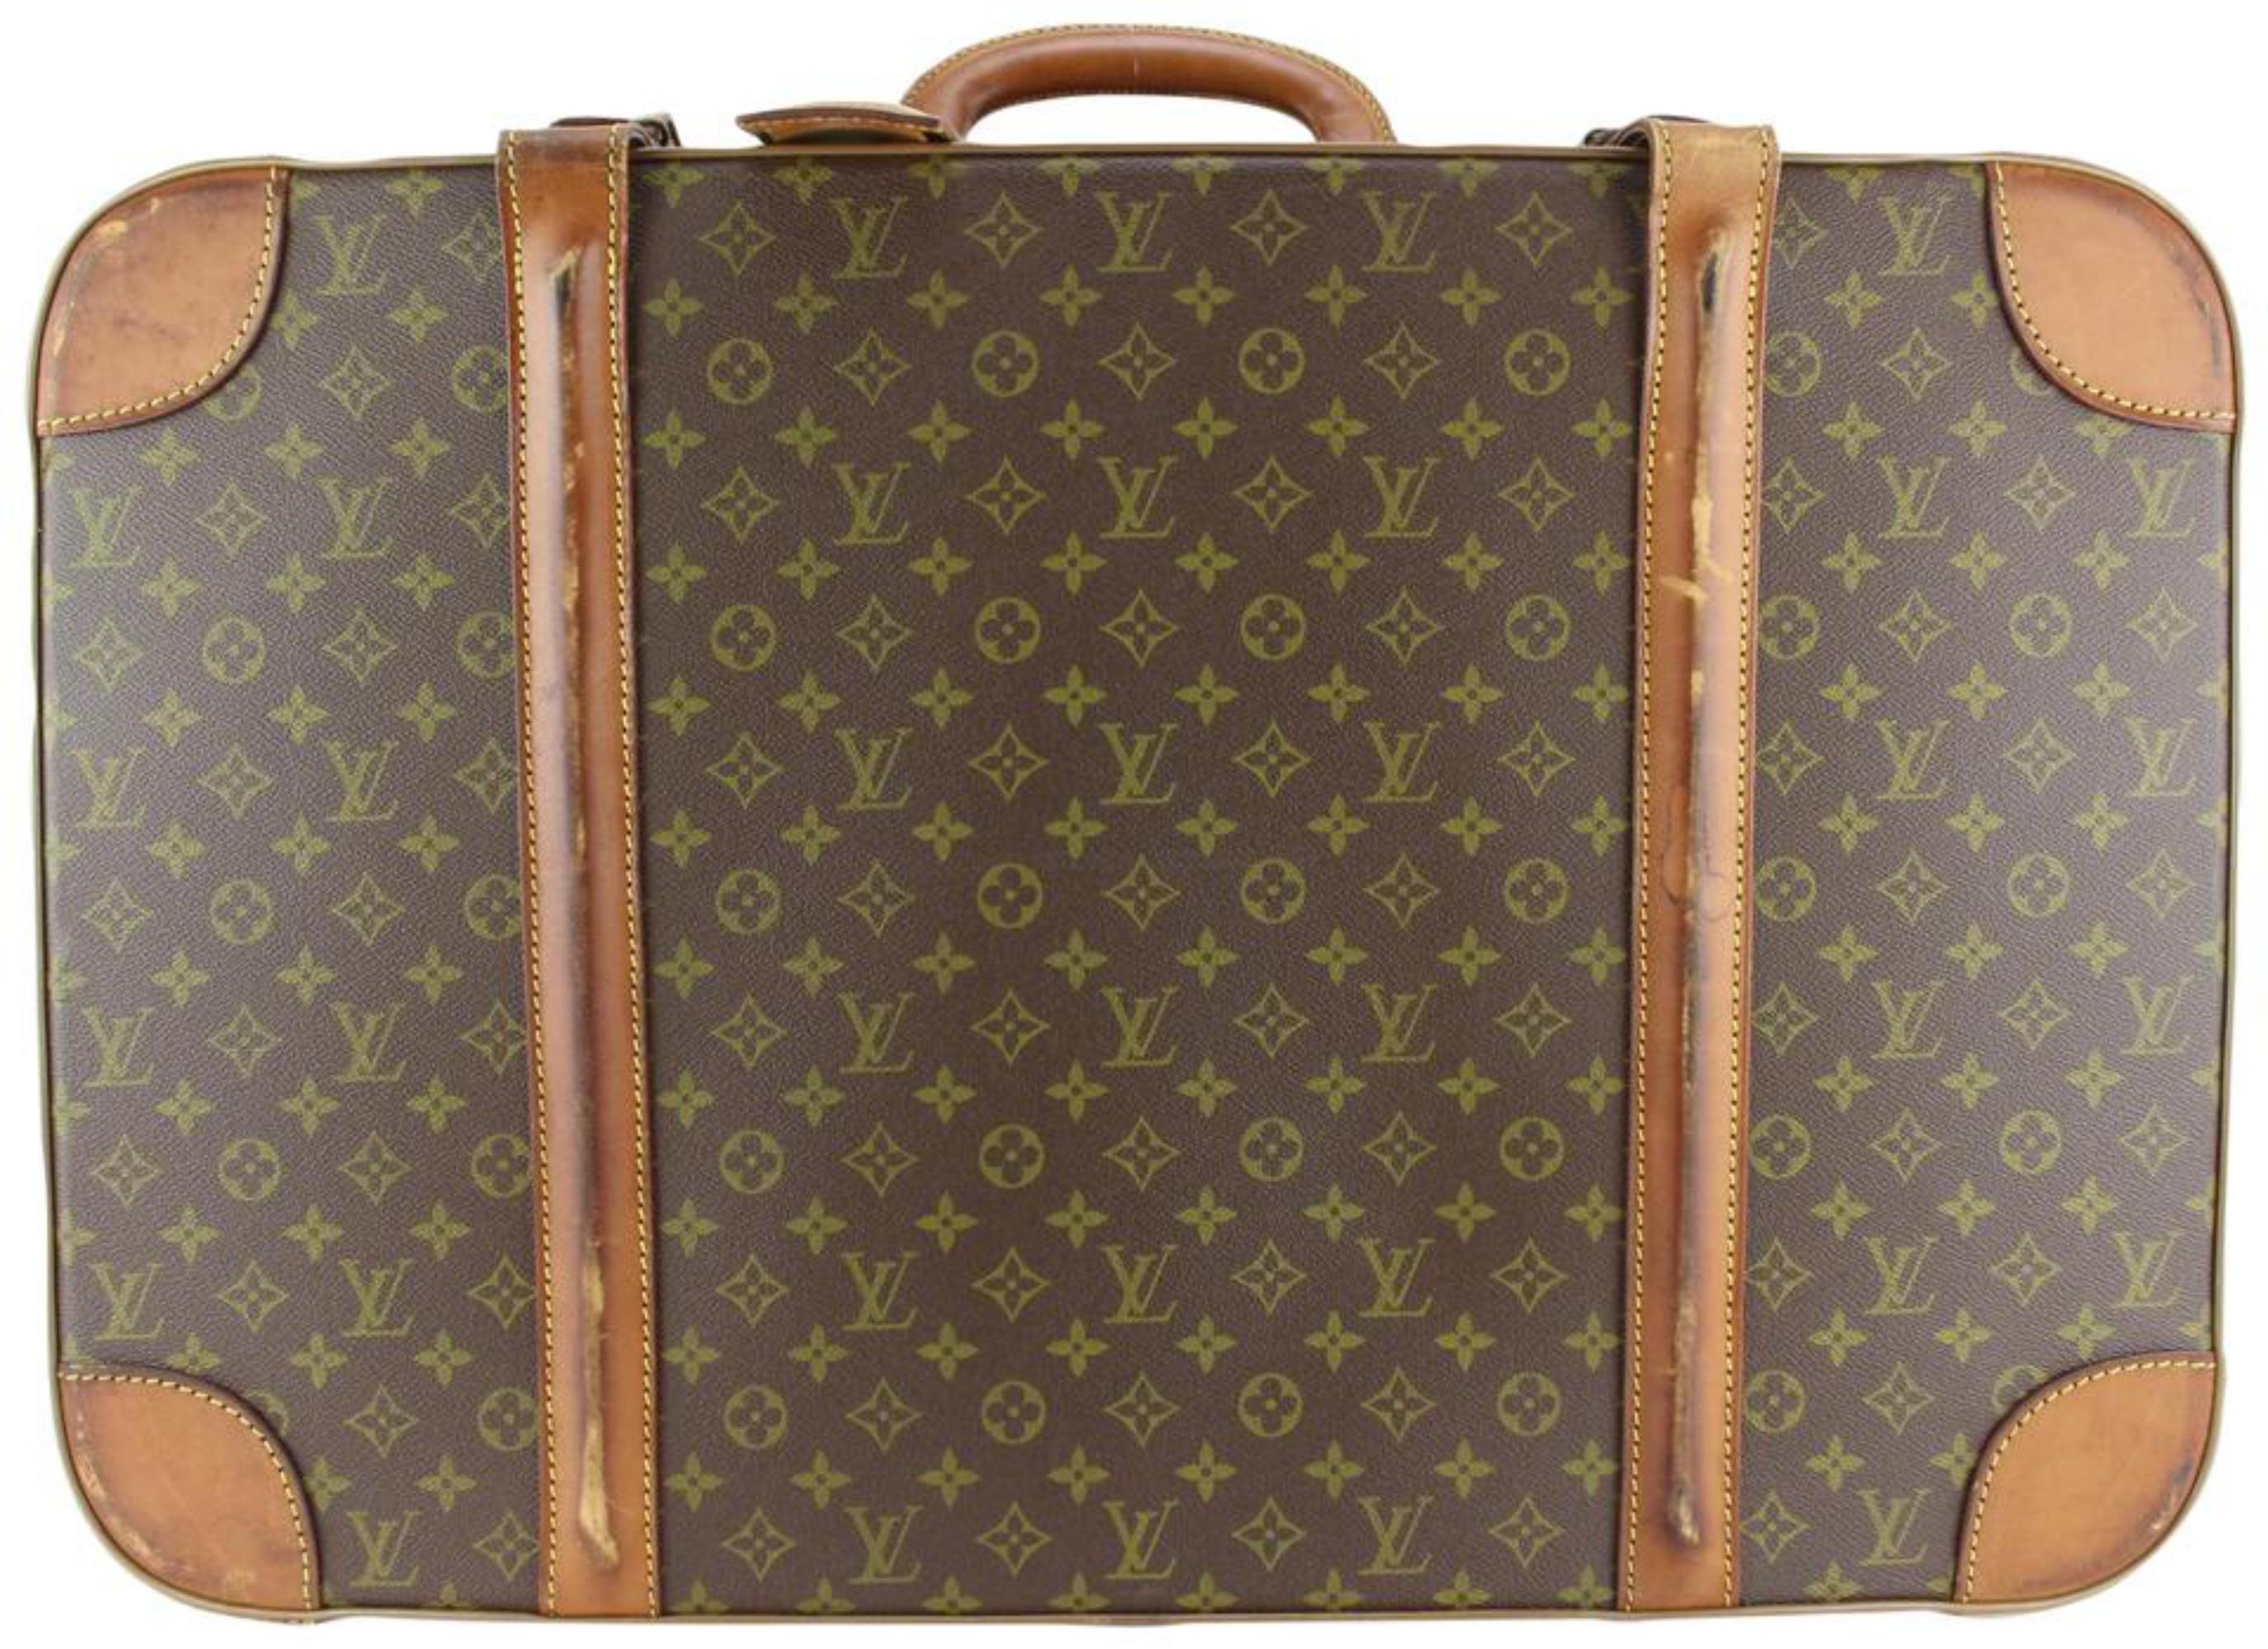 Louis Vuitton hard briefcase NEW